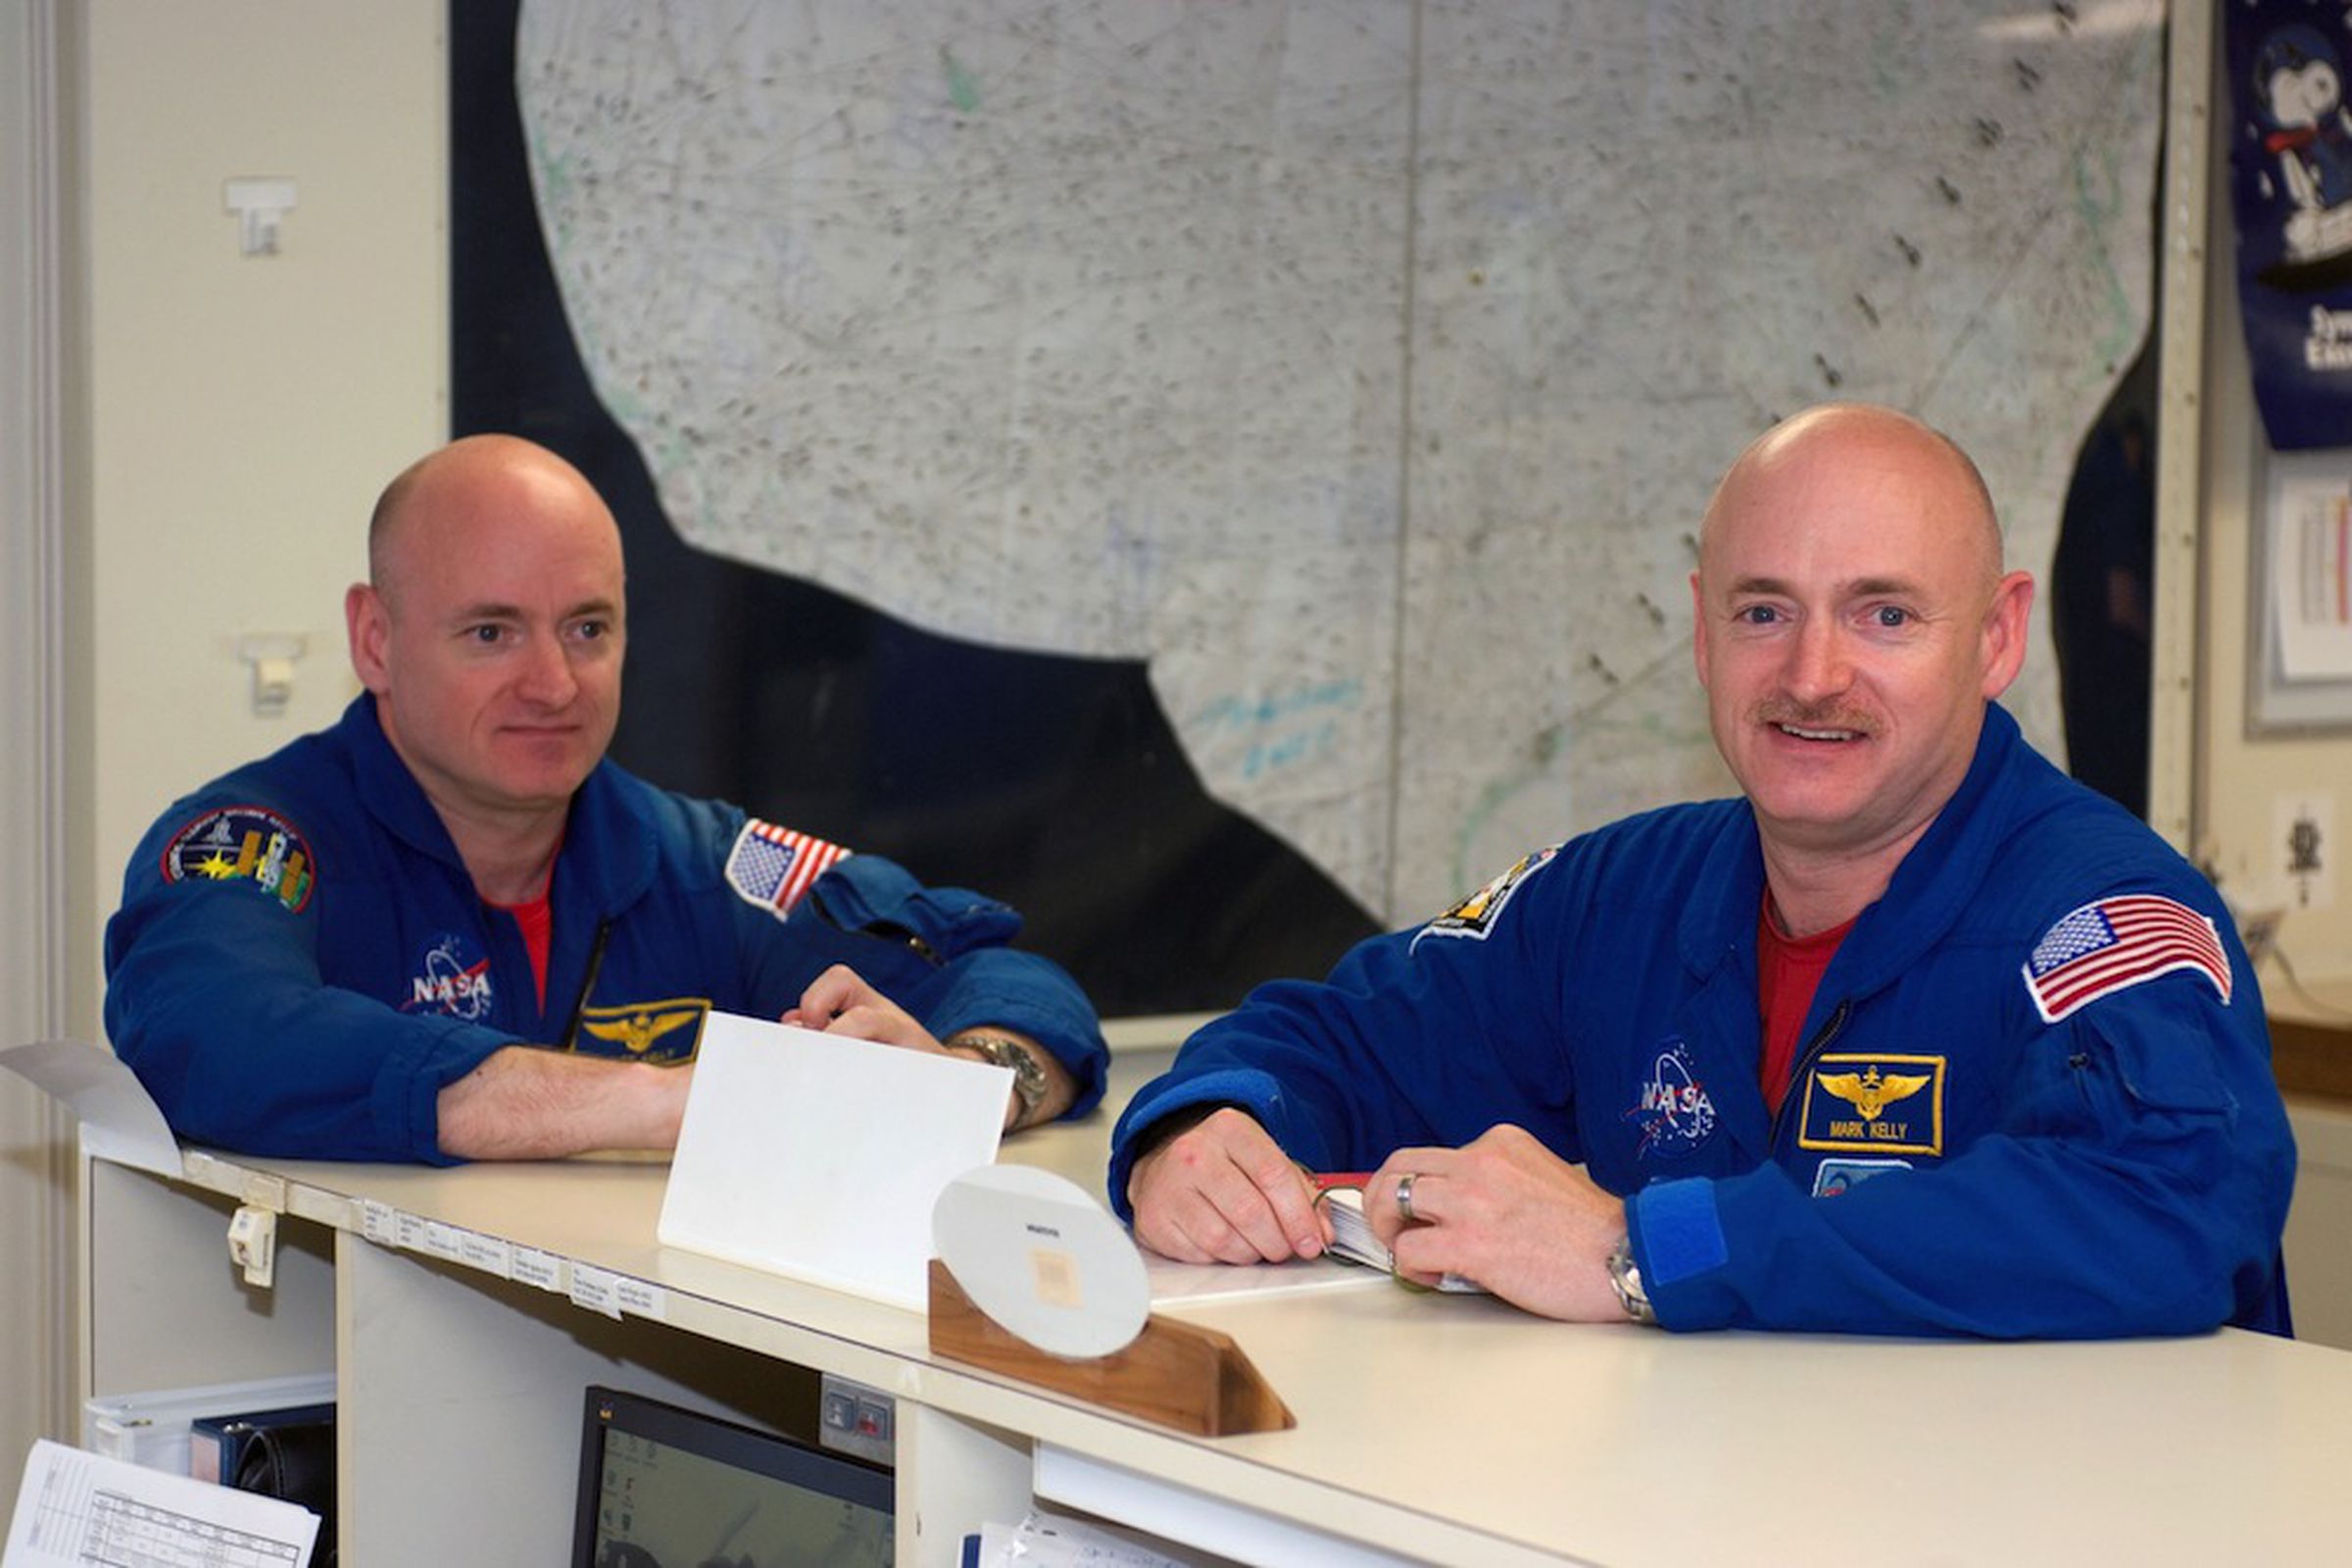 NASA astronaut twins Mark and Scott Kelly